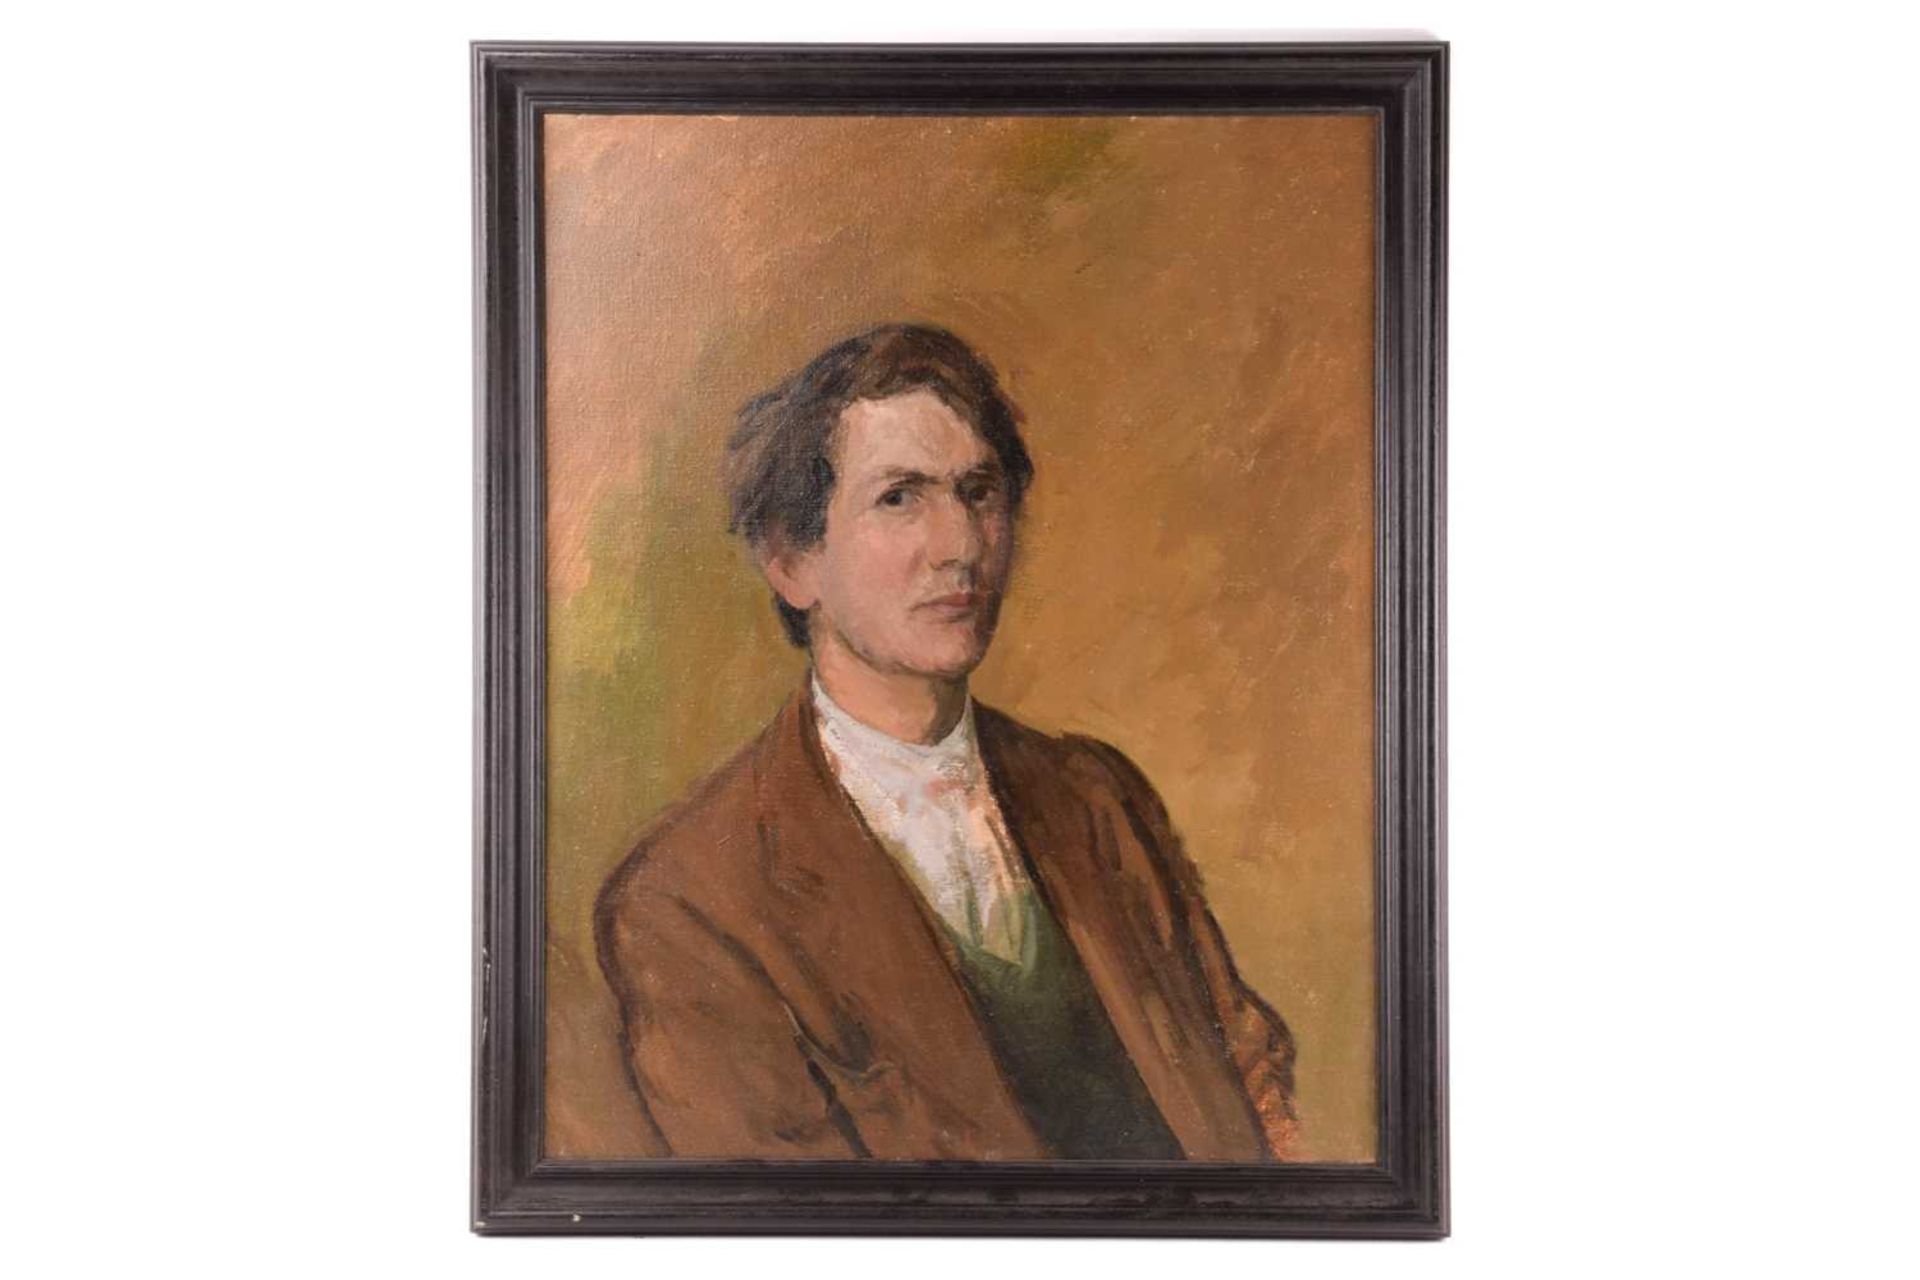 John Sergeant (1937-2010), self-portrait, unsigned, oil on canvas, 76 cm x 61 cm, framed, 86 x 70.